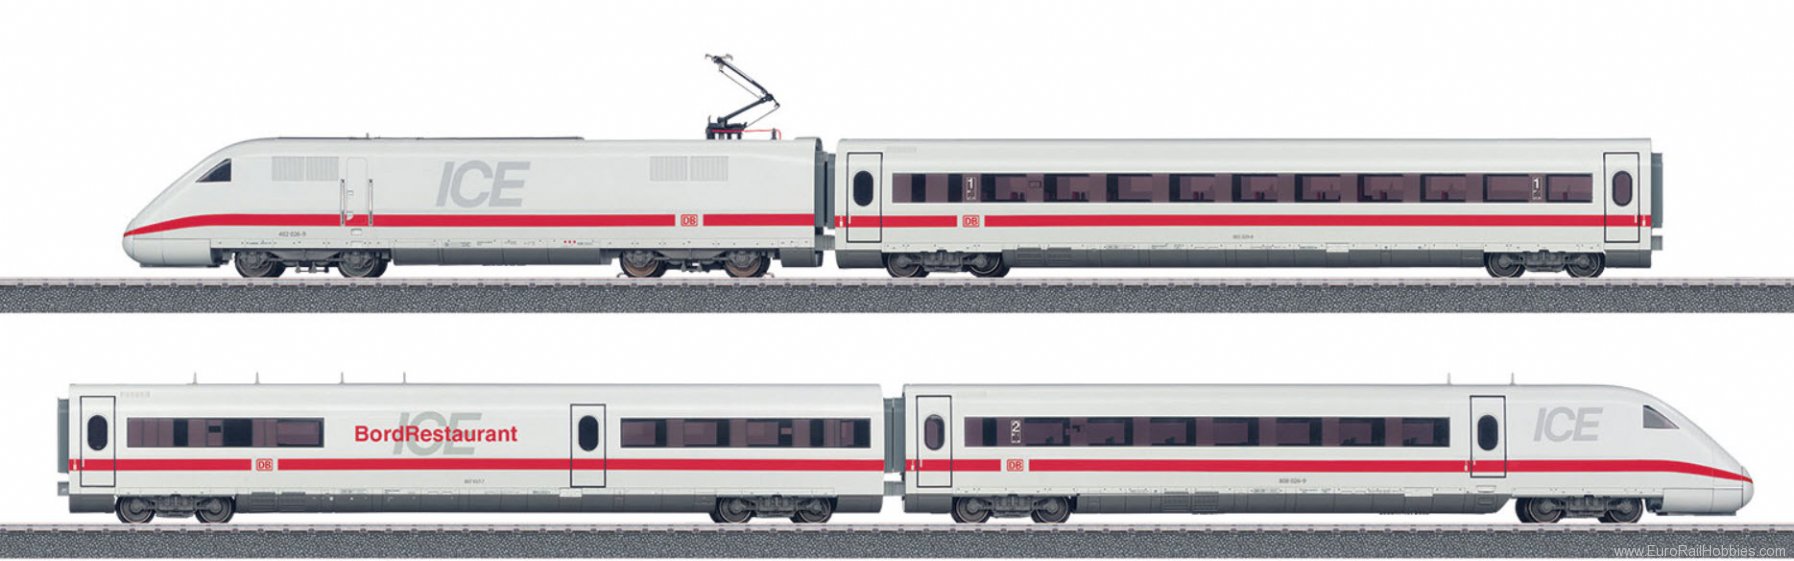 Marklin 36712 ICE 2 High-Speed Train (Marklin Start Up)